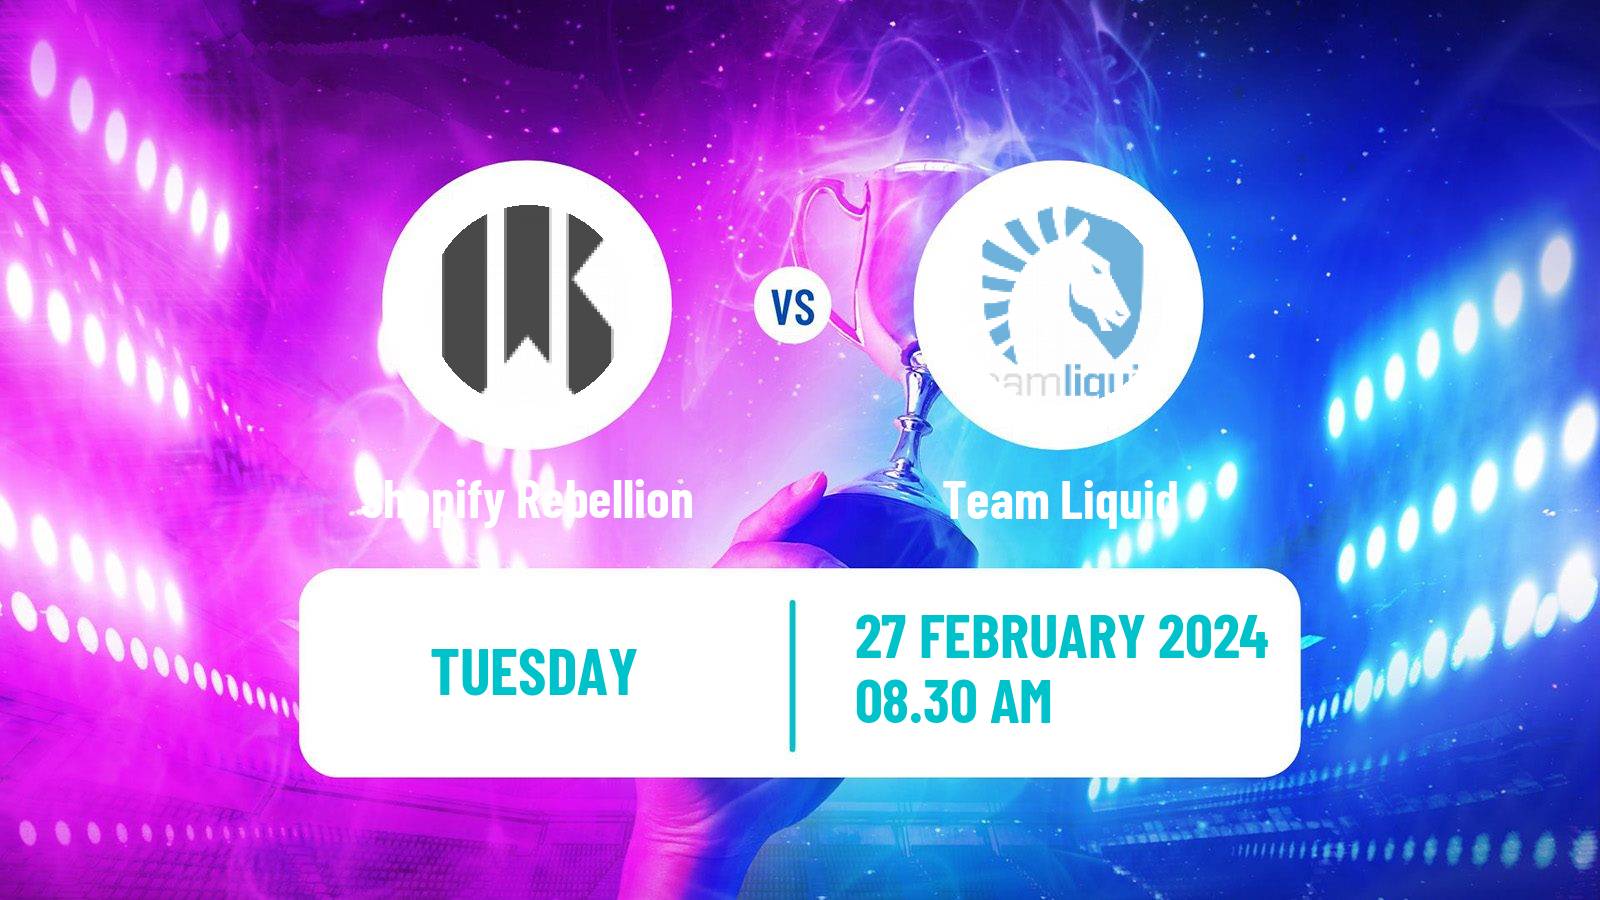 Esports Dota 2 Dreamleague Season 22 Shopify Rebellion - Team Liquid